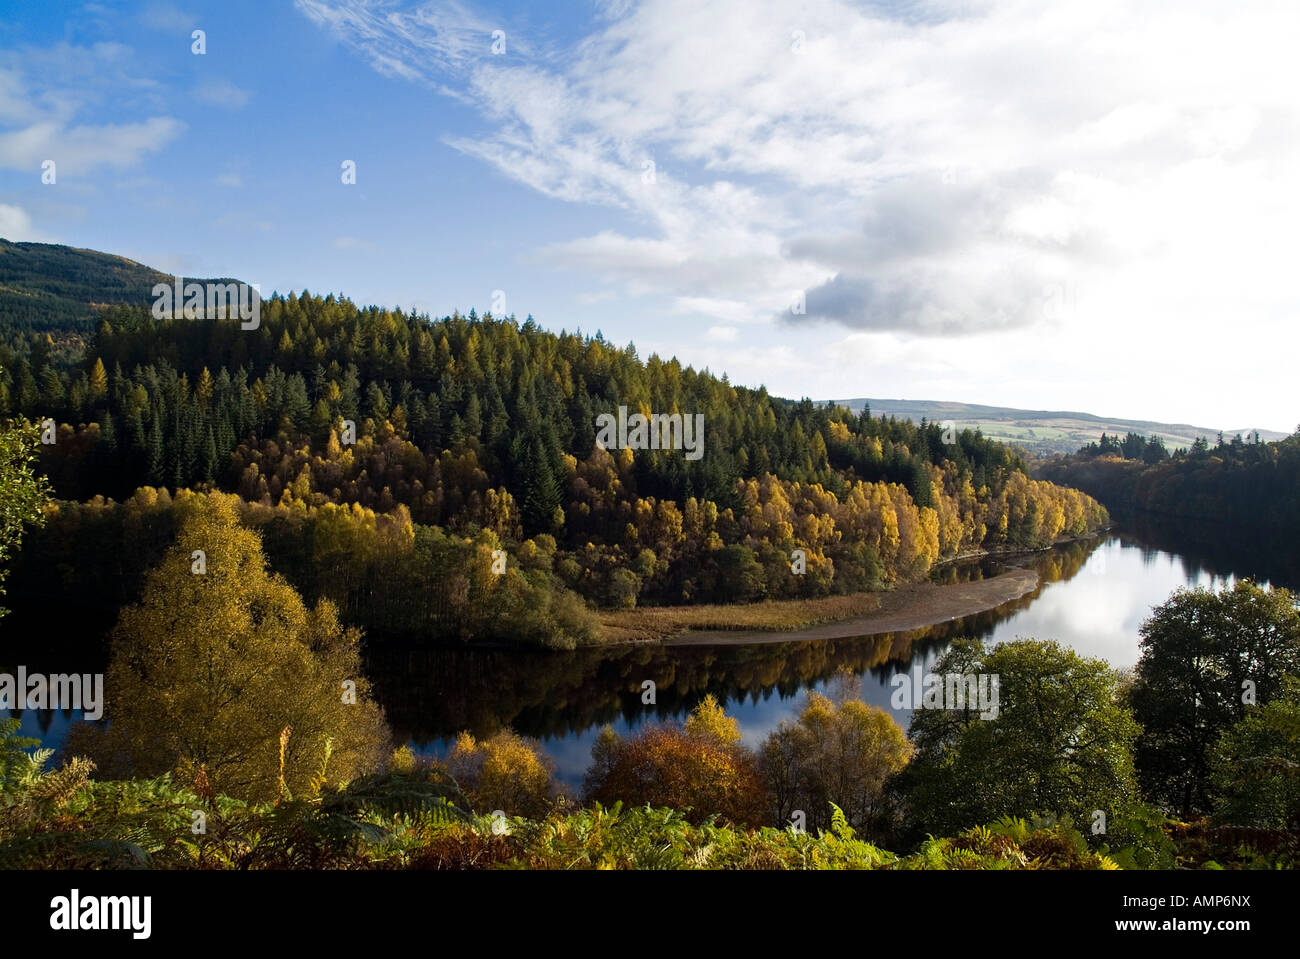 dh Scottish Highlands LOCH FASKALLY PERTHSHIRE arbres d'automne pittoresque beau royaume-uni paysage forêt tranquille pays automne Ecosse glen Lochs bois Banque D'Images